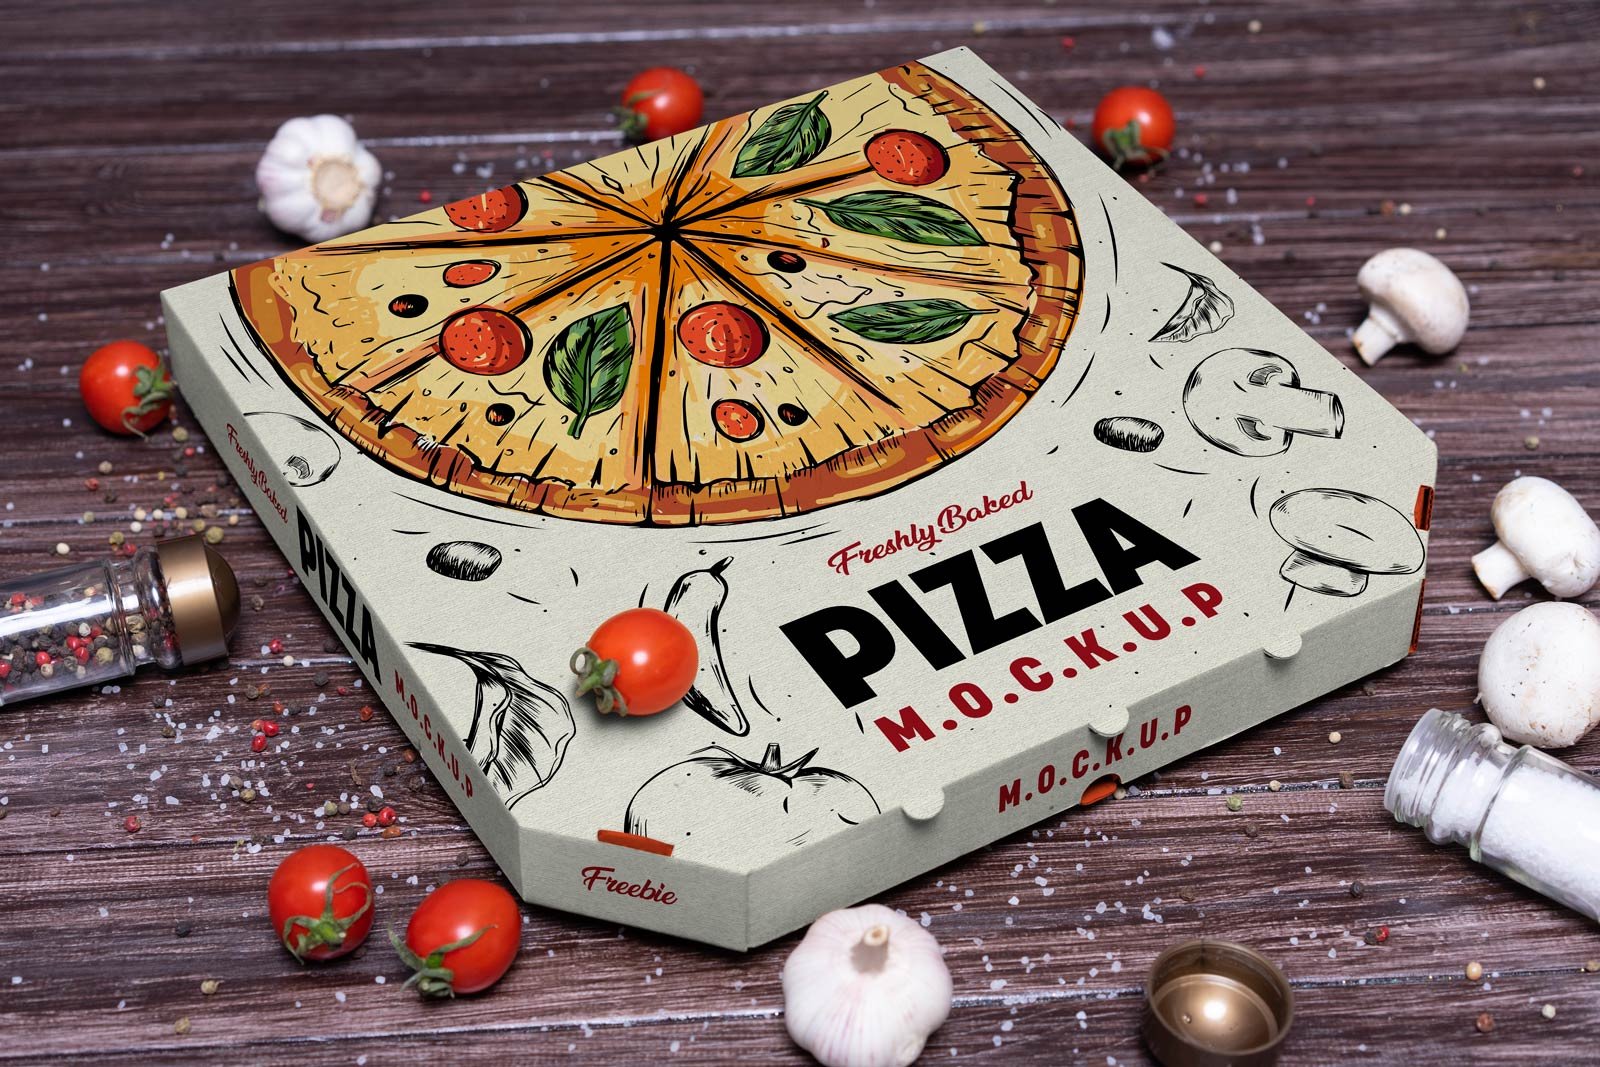 Pizza -Box -Modell in der Perspektive sehen